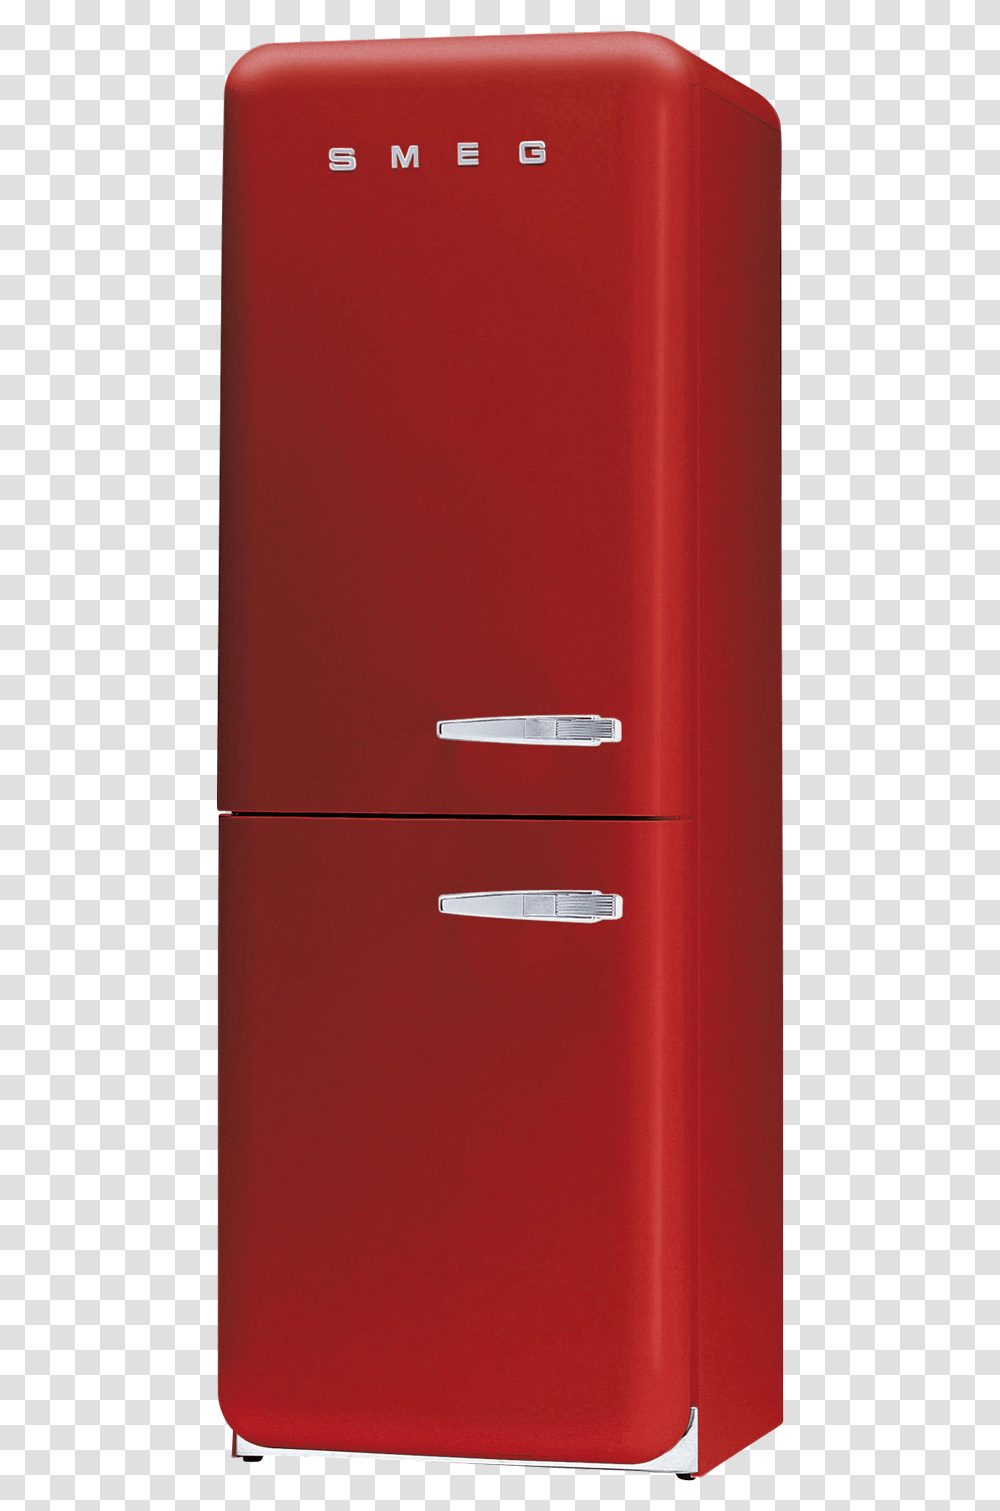 Refrigerator Image Refrigerador De Colores Chile, Mobile Phone, Electronics, Cell Phone, Appliance Transparent Png